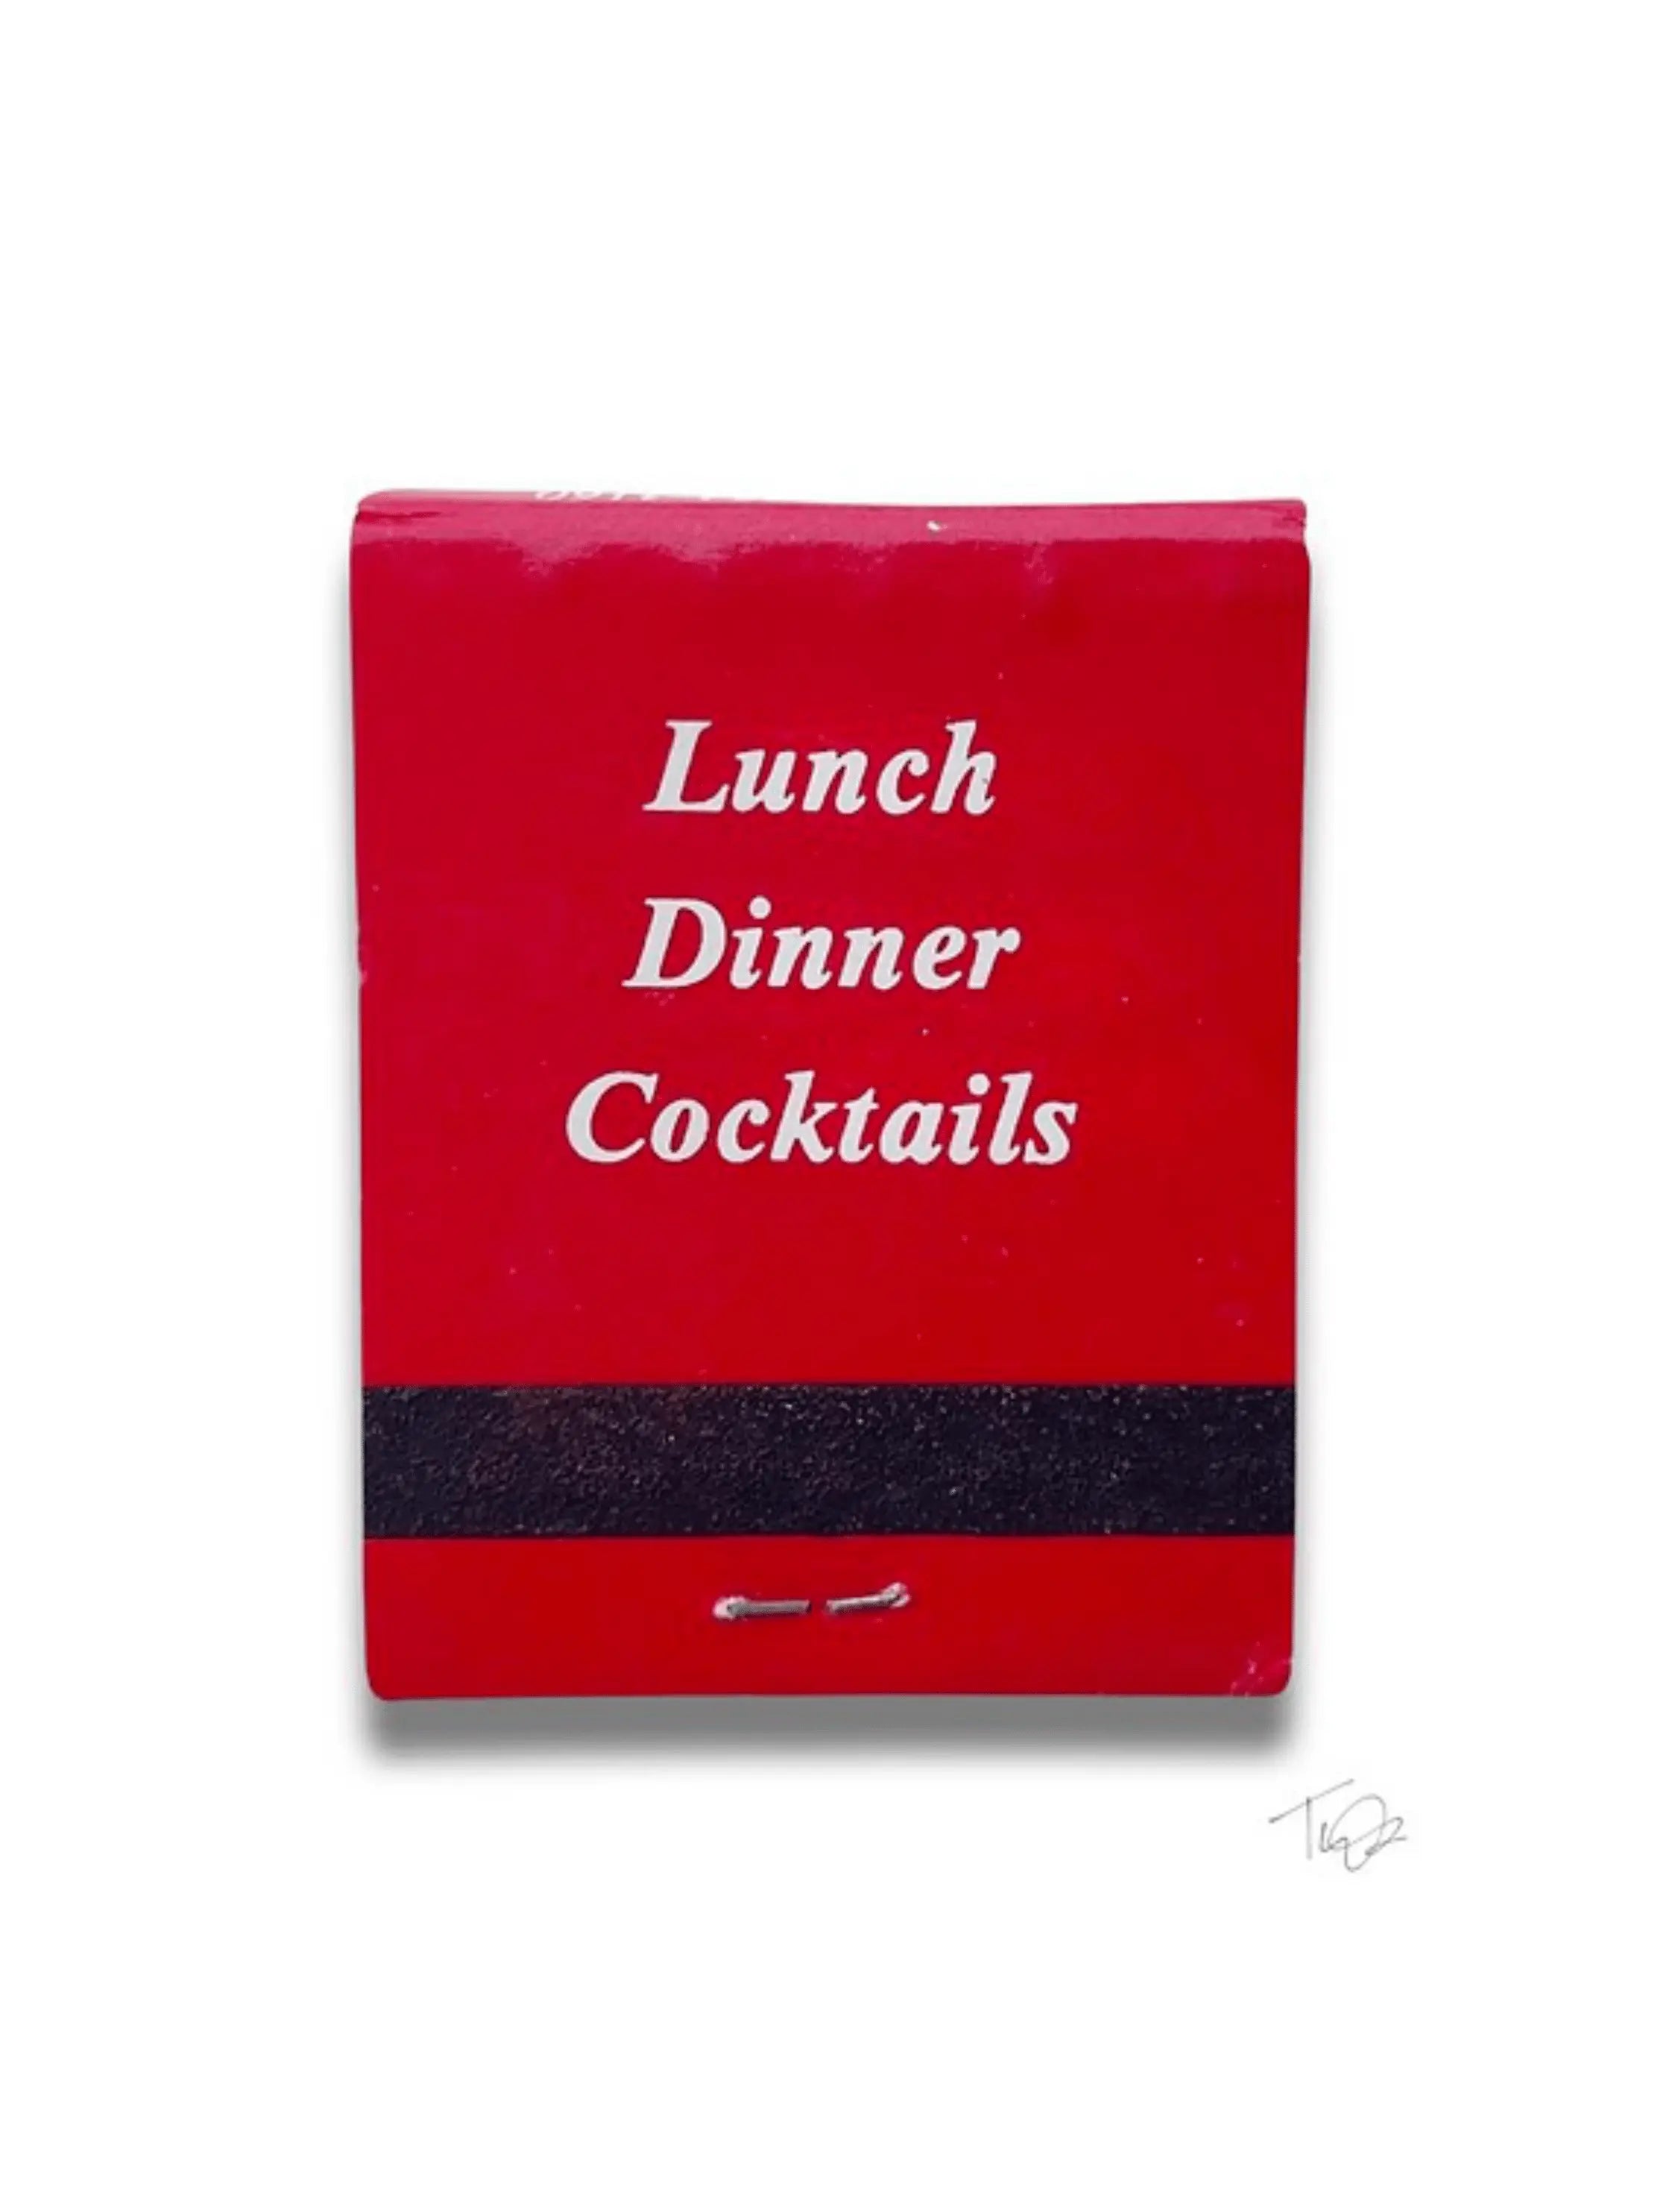 Lunch Dinner Cocktails Matchbook Print